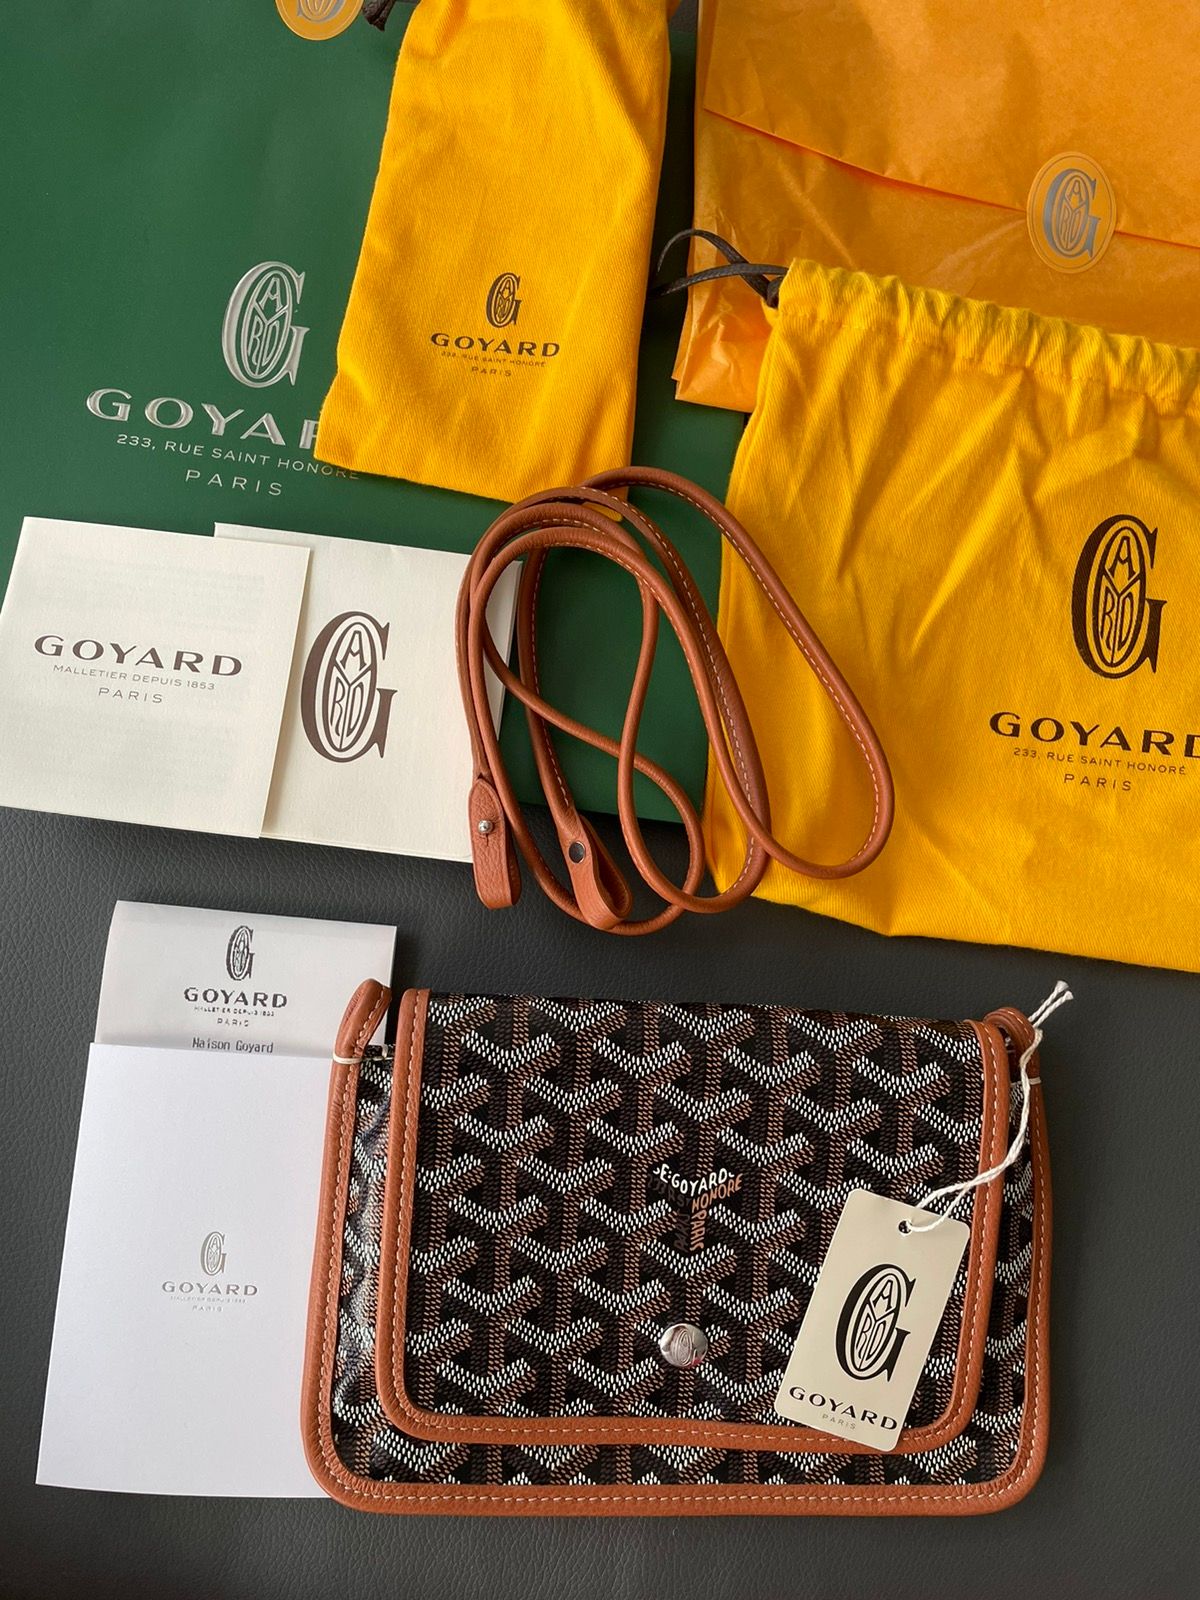 Goyard Hotel Du Parc Red Duffle Bag Extendable Travel Carry On